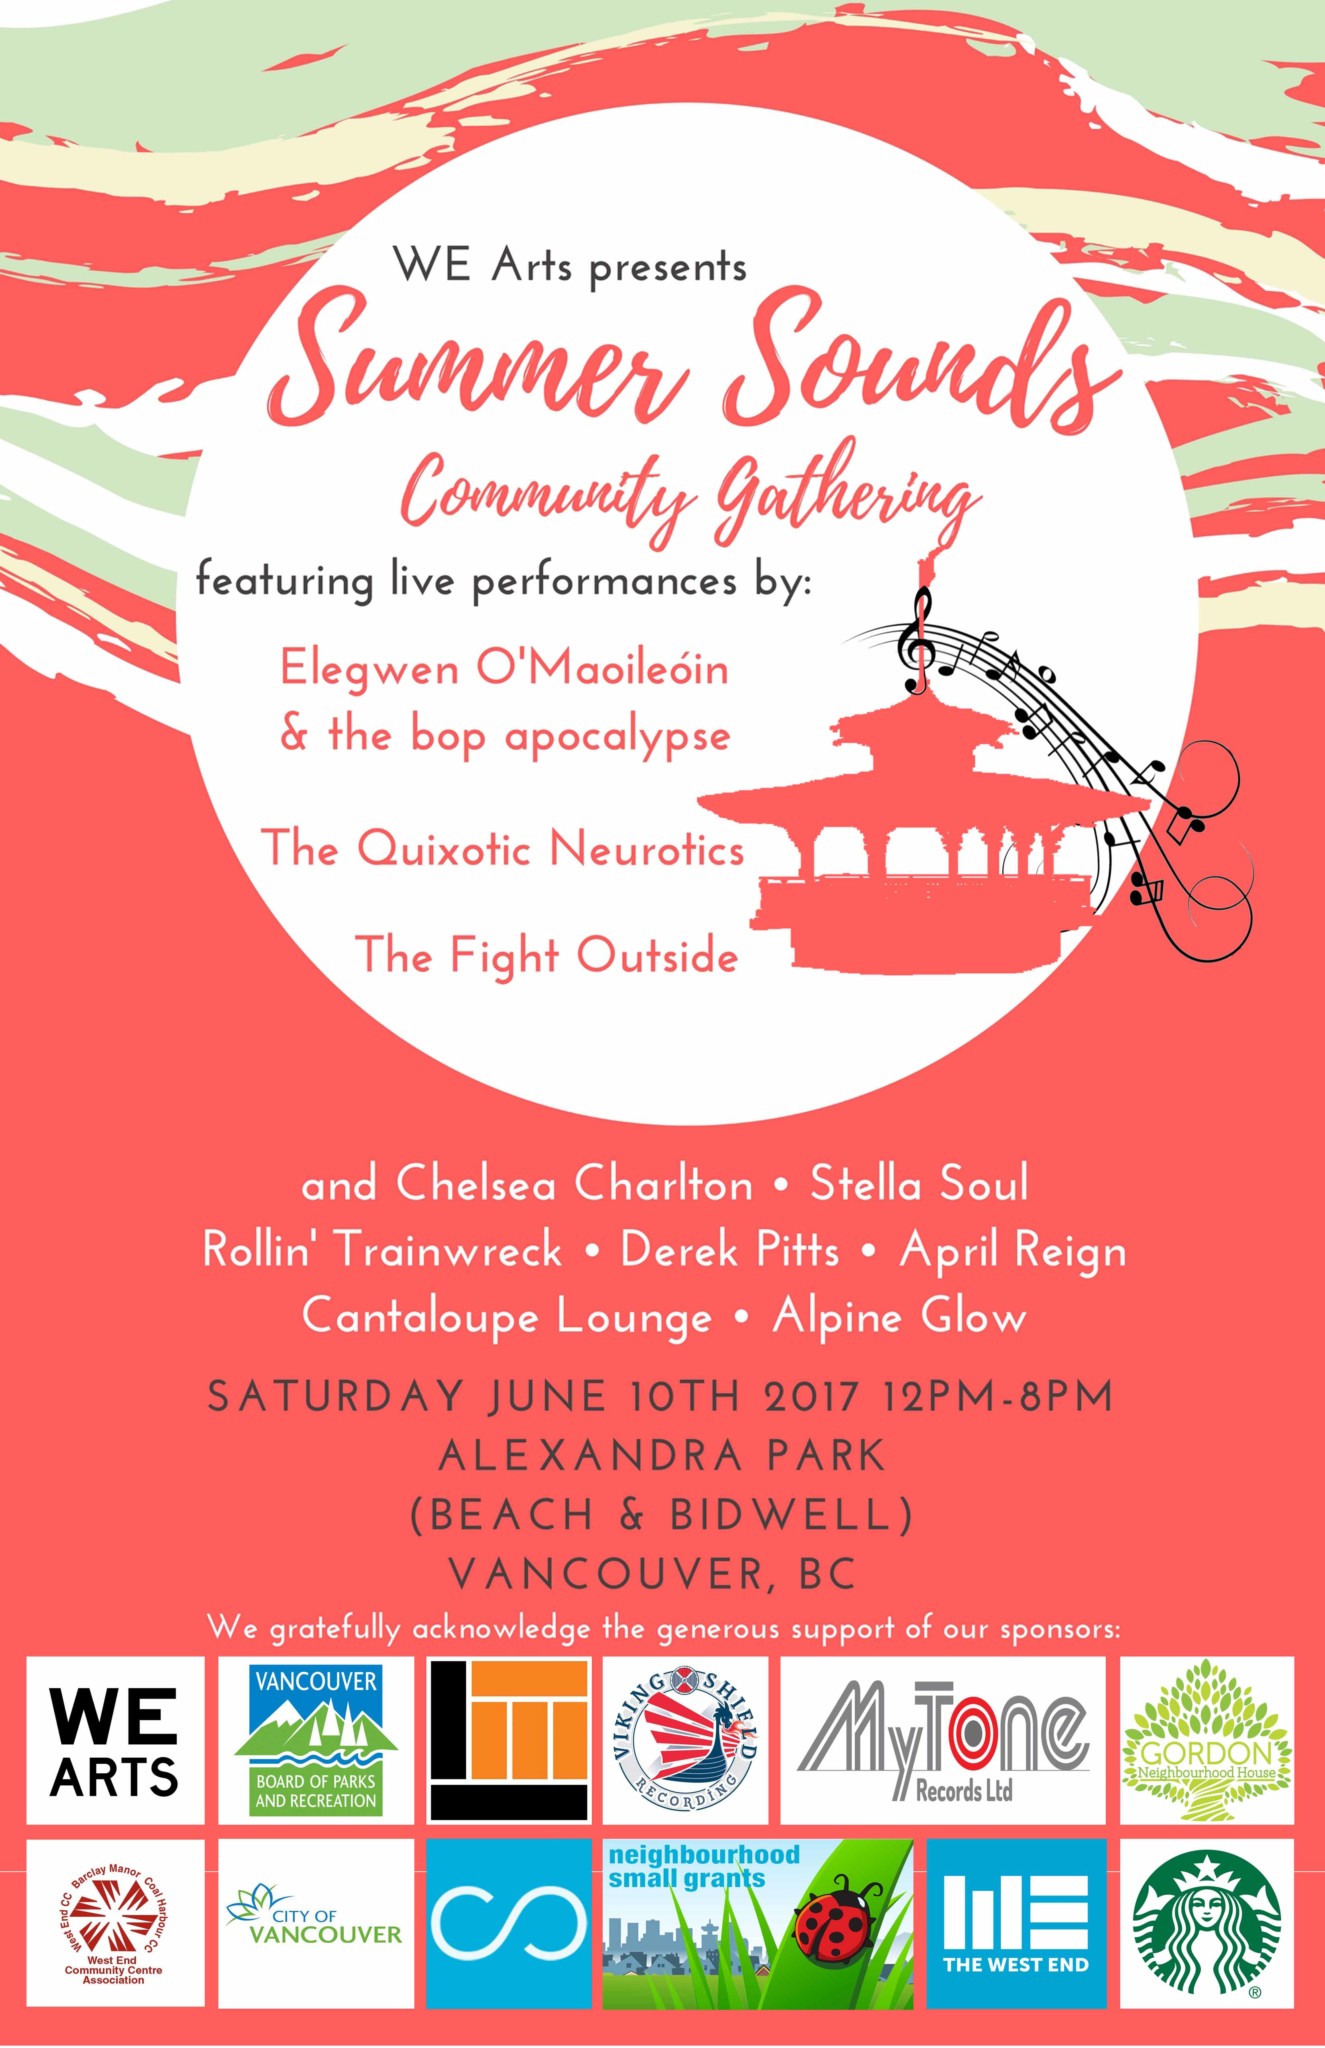 Summer Sounds Community Gathering Reviving a Neighbourhood Tradition